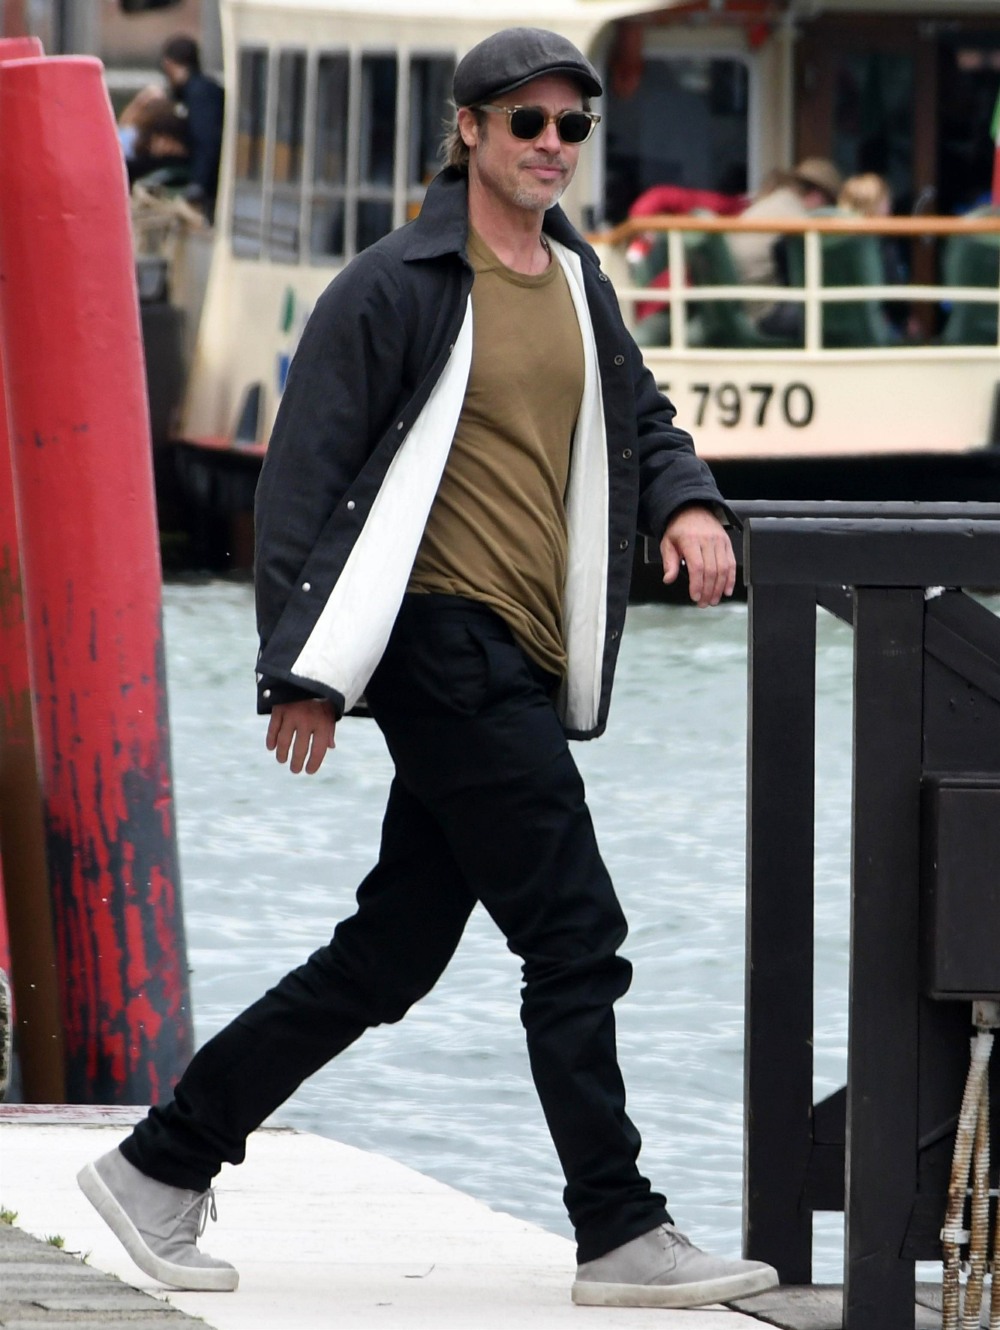 Brad Pitt is seen visiting the Biennale in Venice